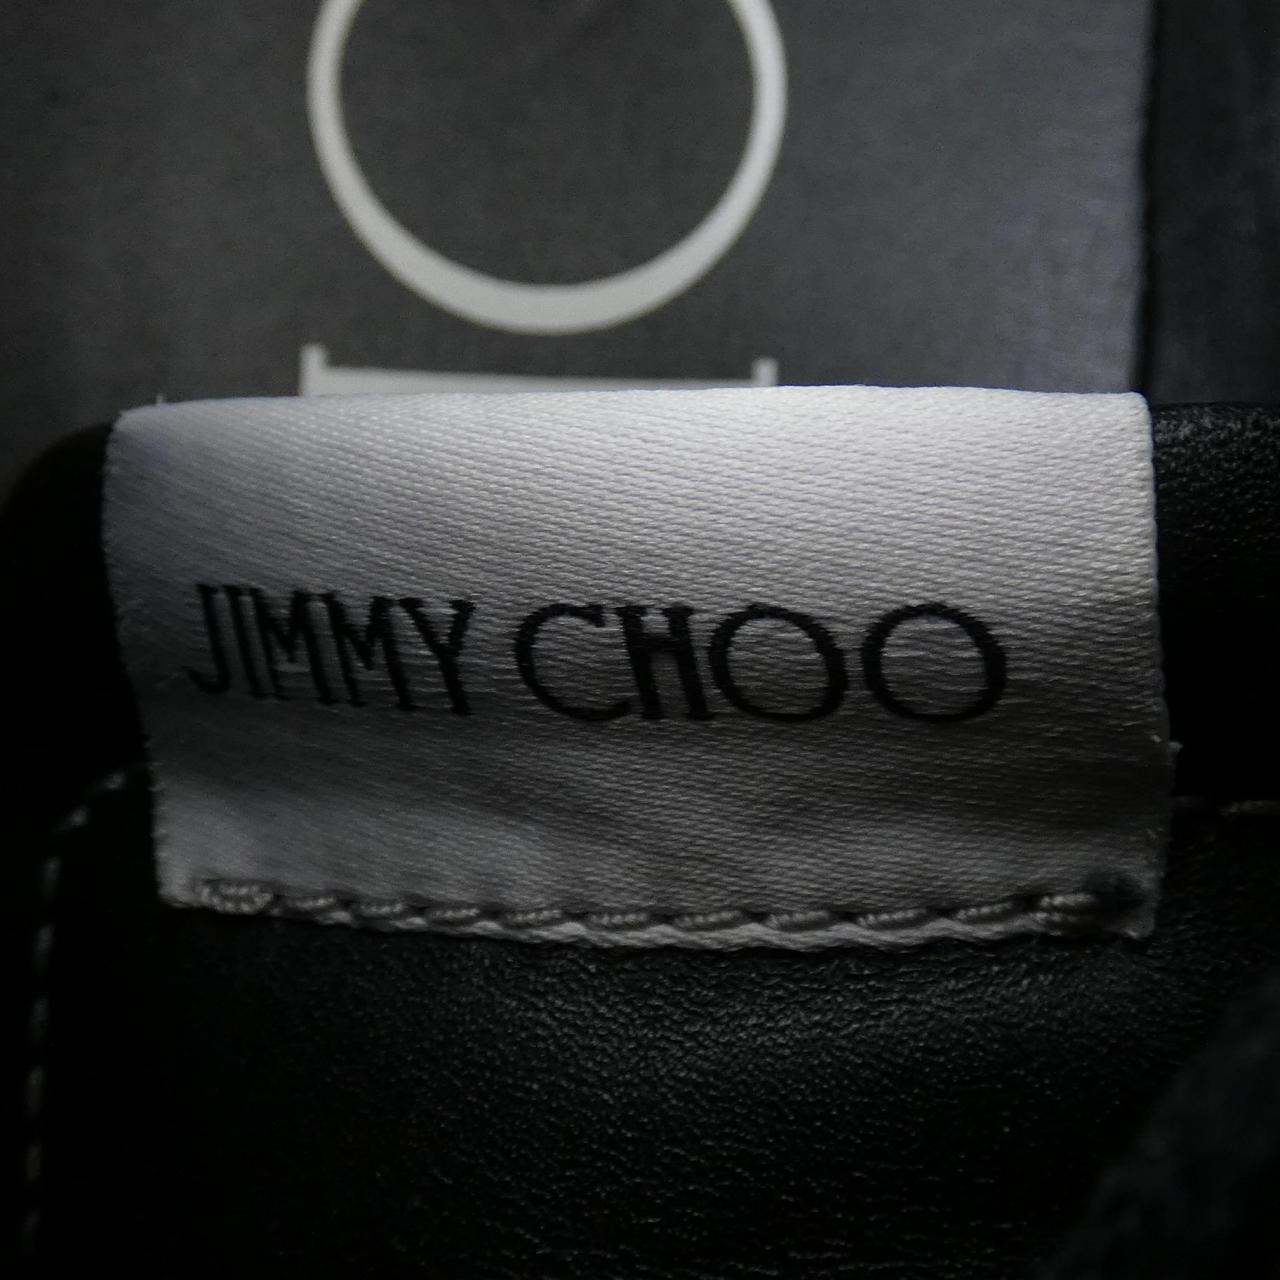 JIMMY CHOO JIMMY CHOO Sneakers